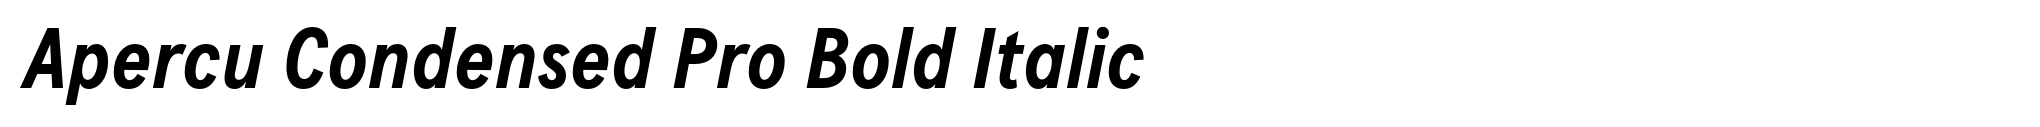 Apercu Condensed Pro Bold Italic image